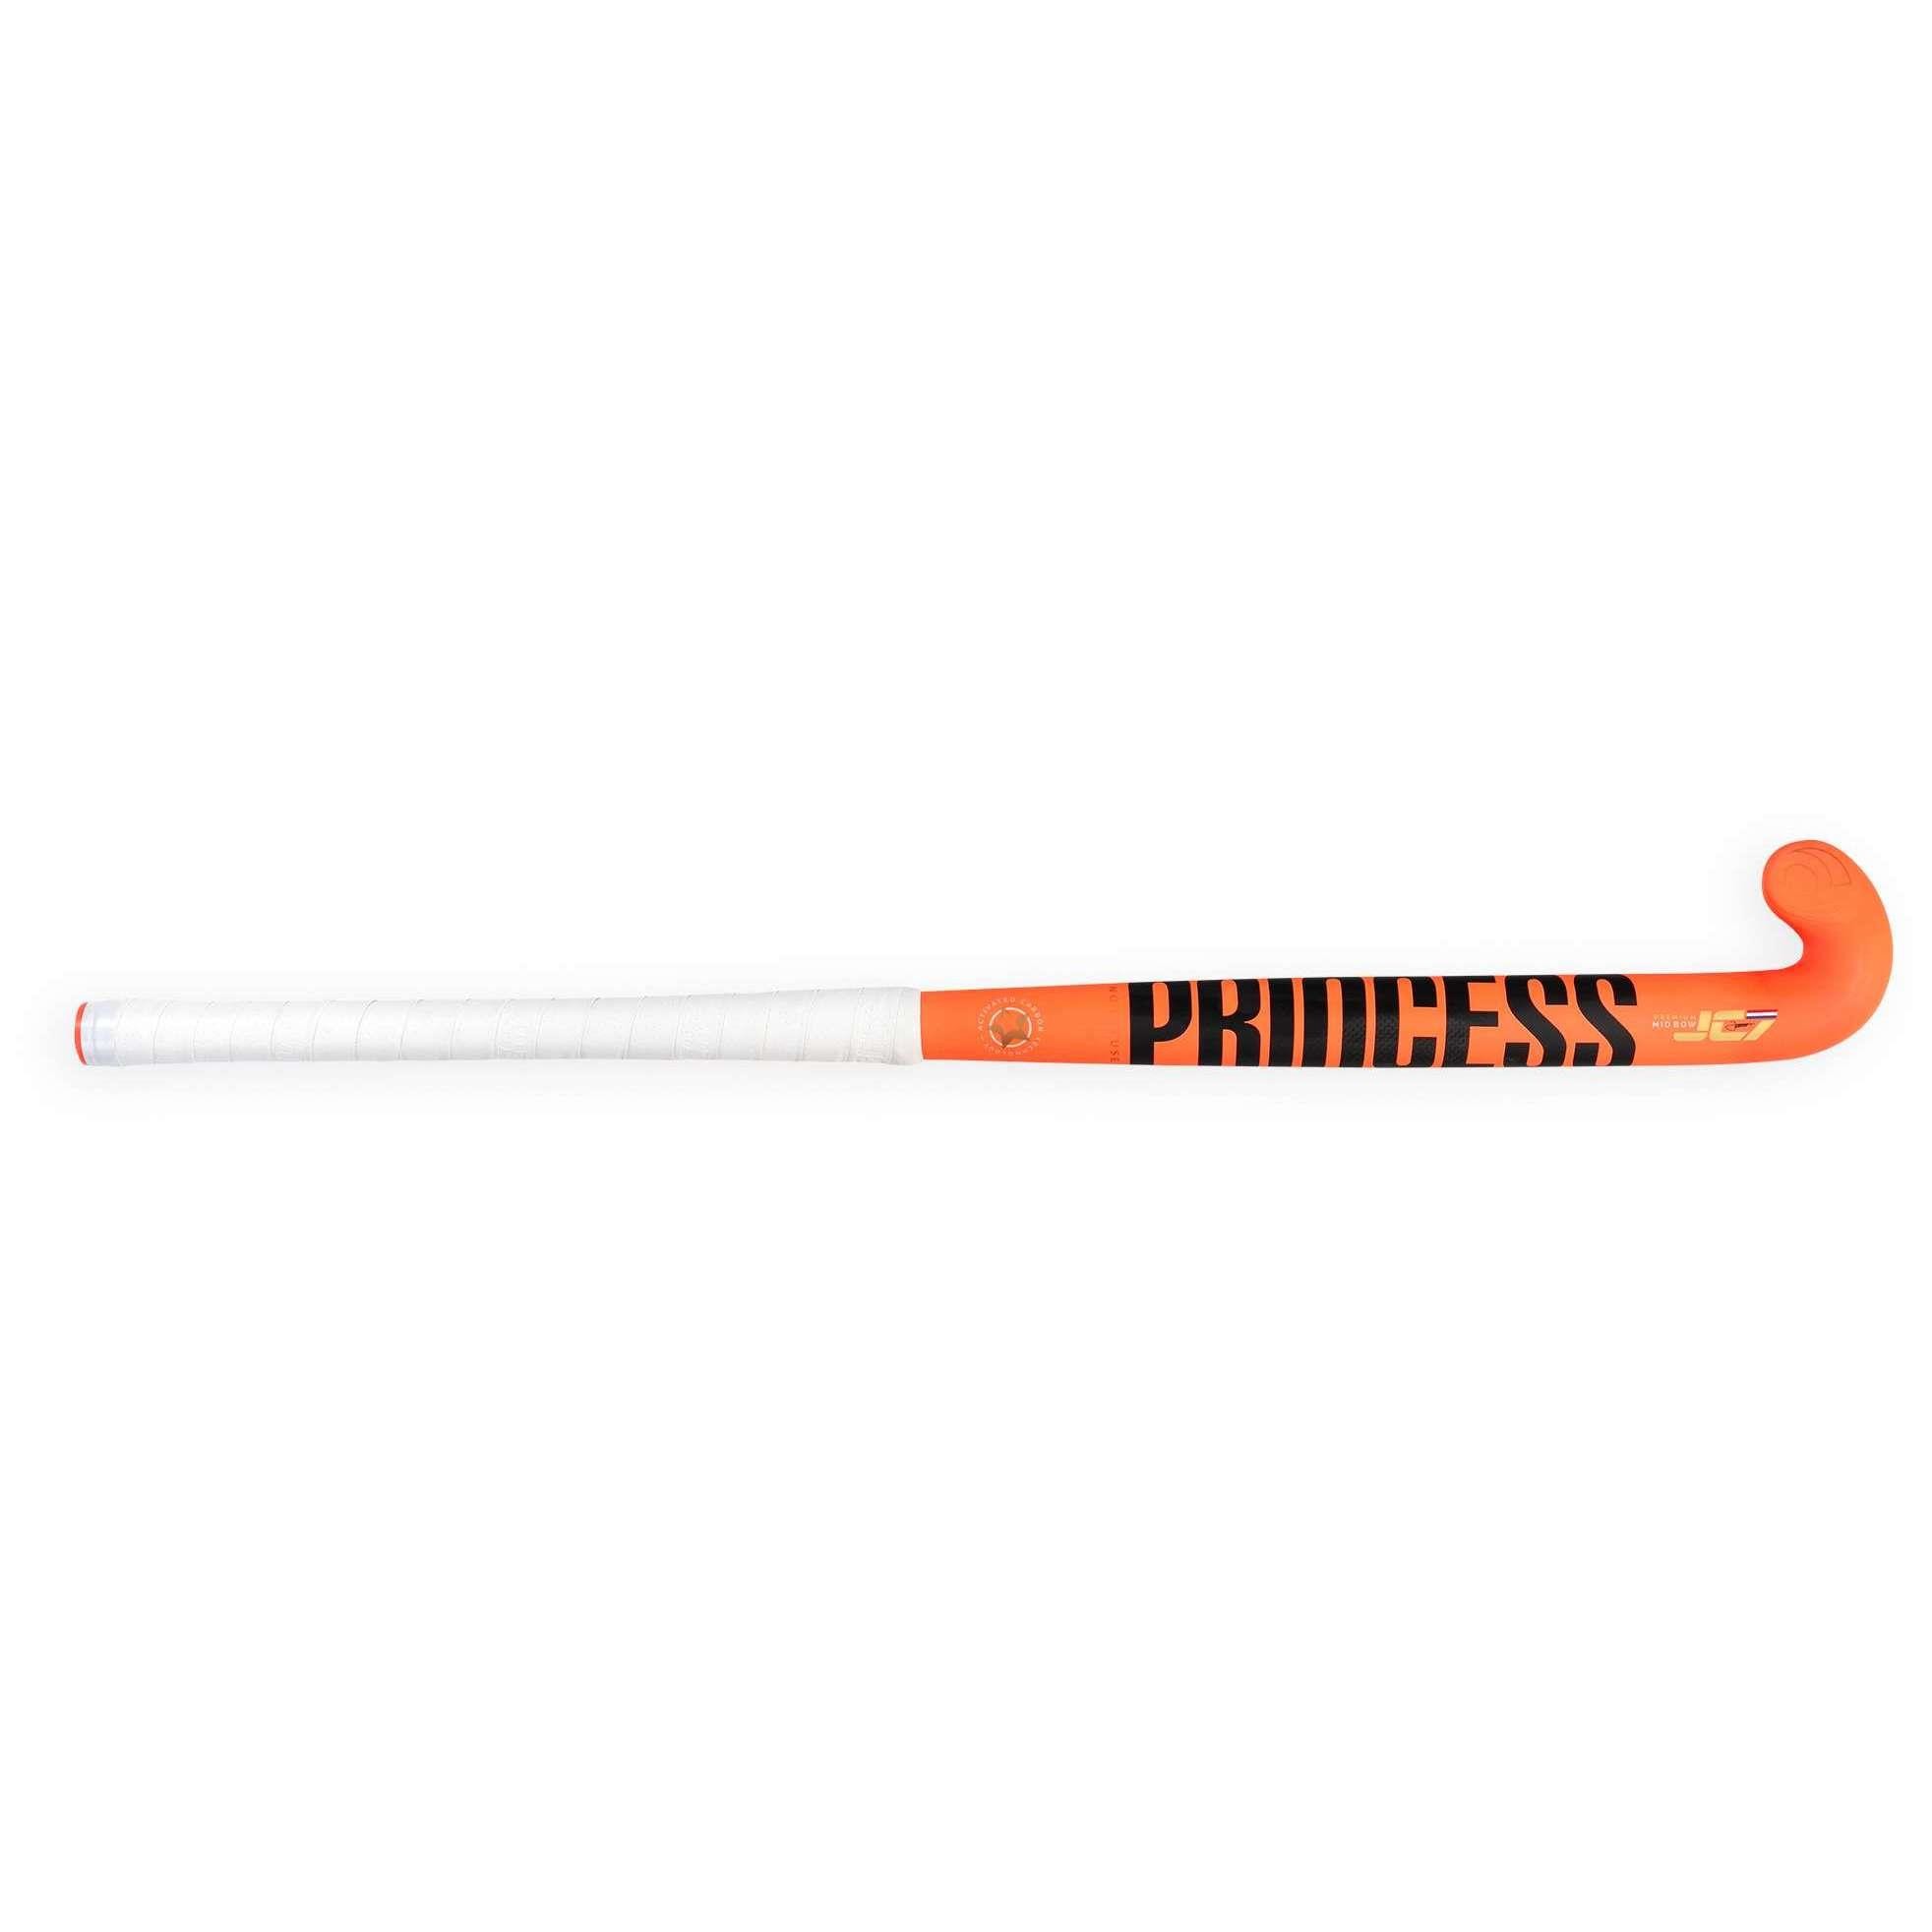 Overtreding Nieuwe betekenis Rubber Princess Premium 7 Star JC 7 Mid Bow hockeystick junior - 34 inch